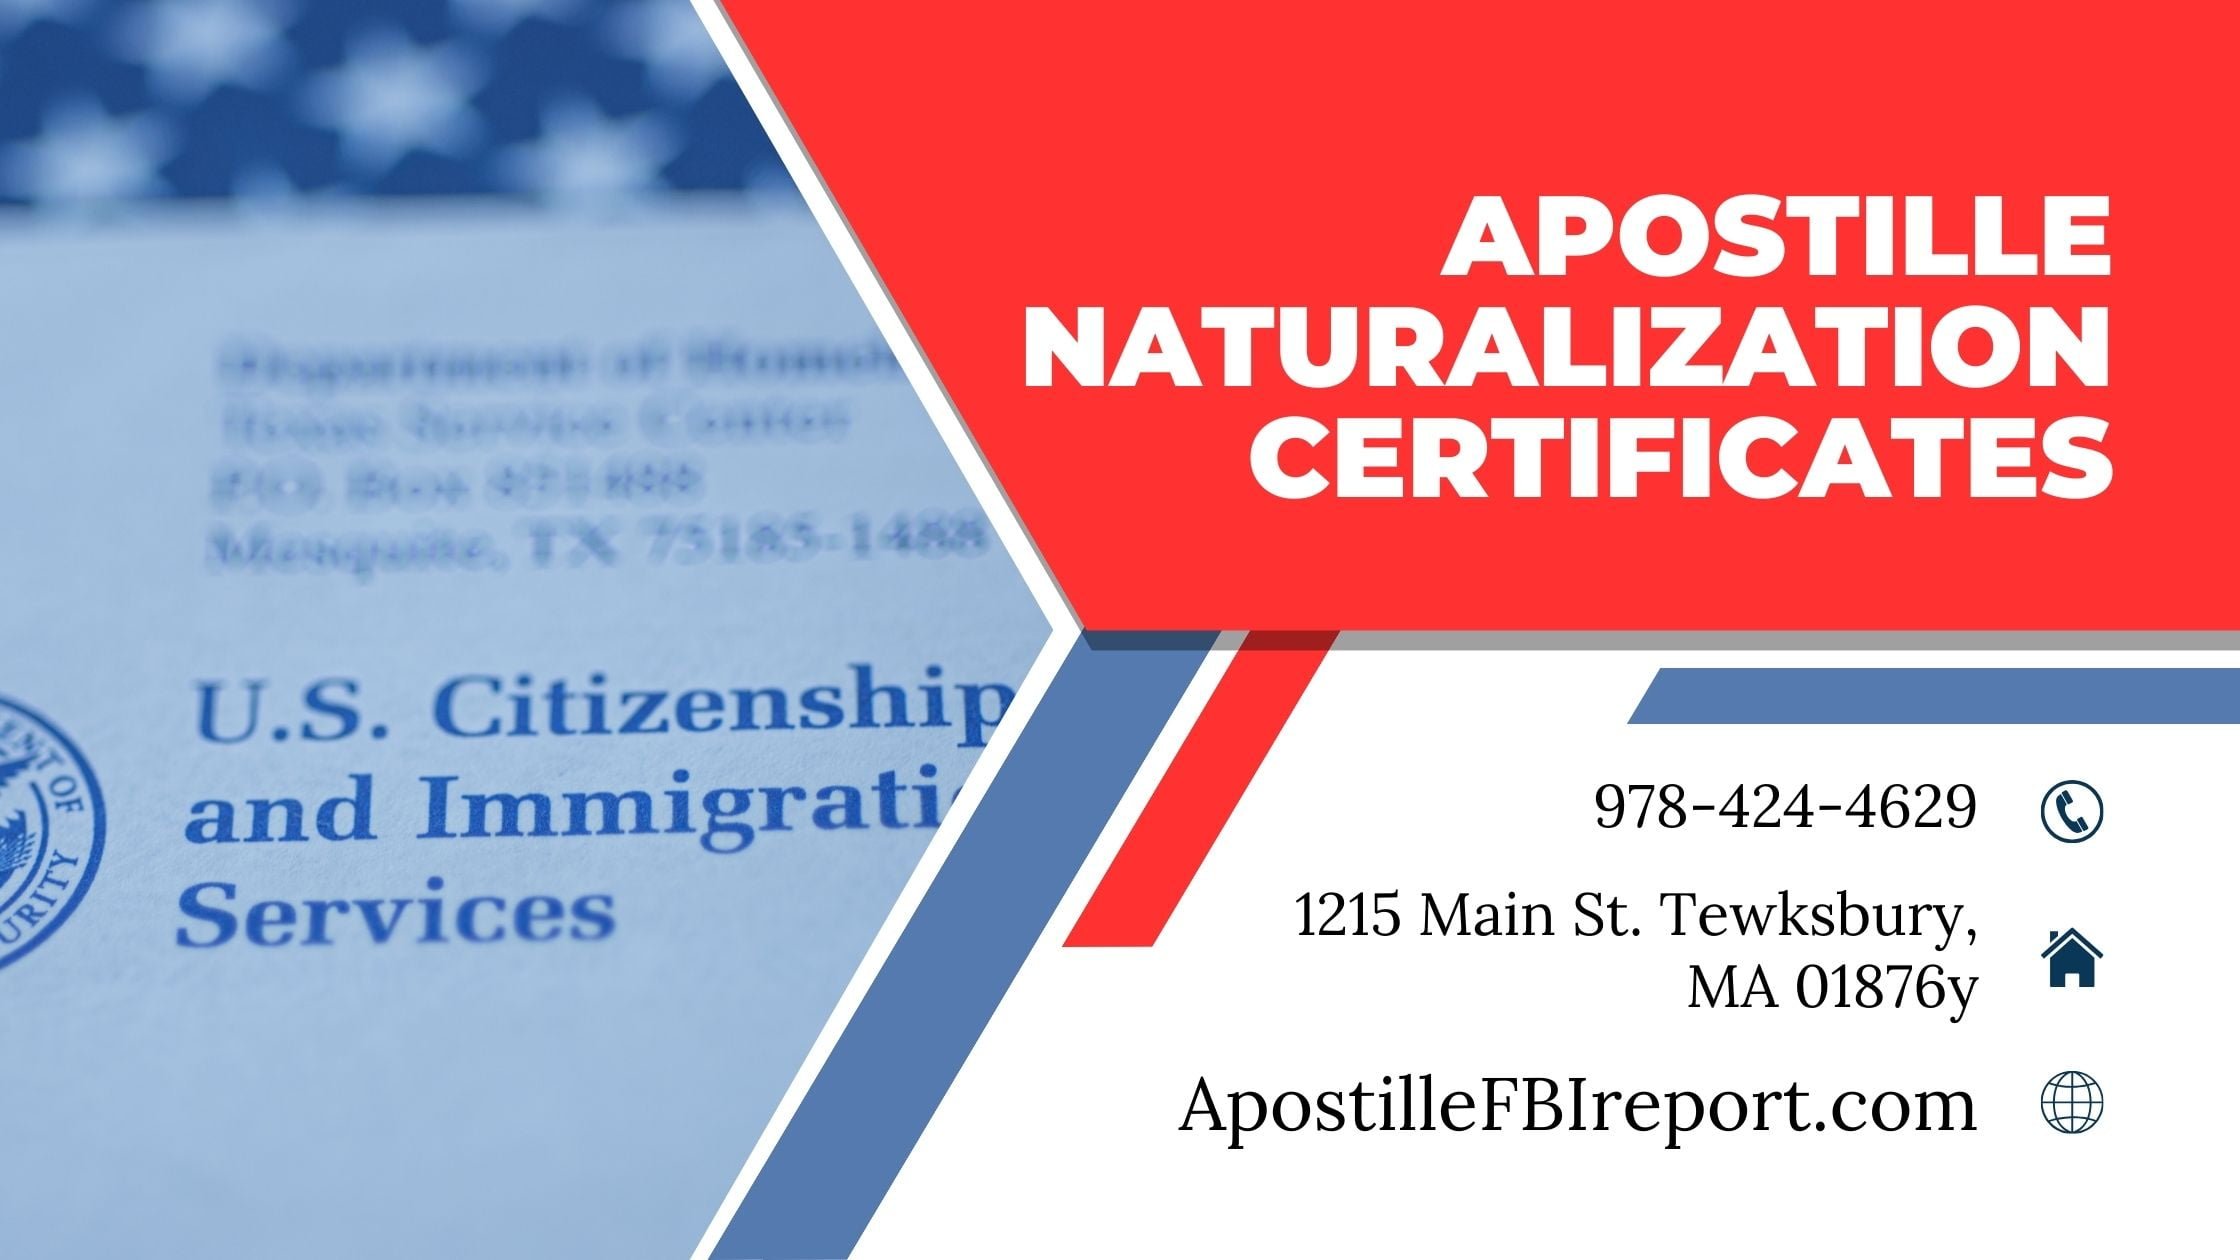 Apostille Your U.S. Naturalization Certificate Easily - Apostille FBI Report - Apostille FBI Report - Apostille FBI Report